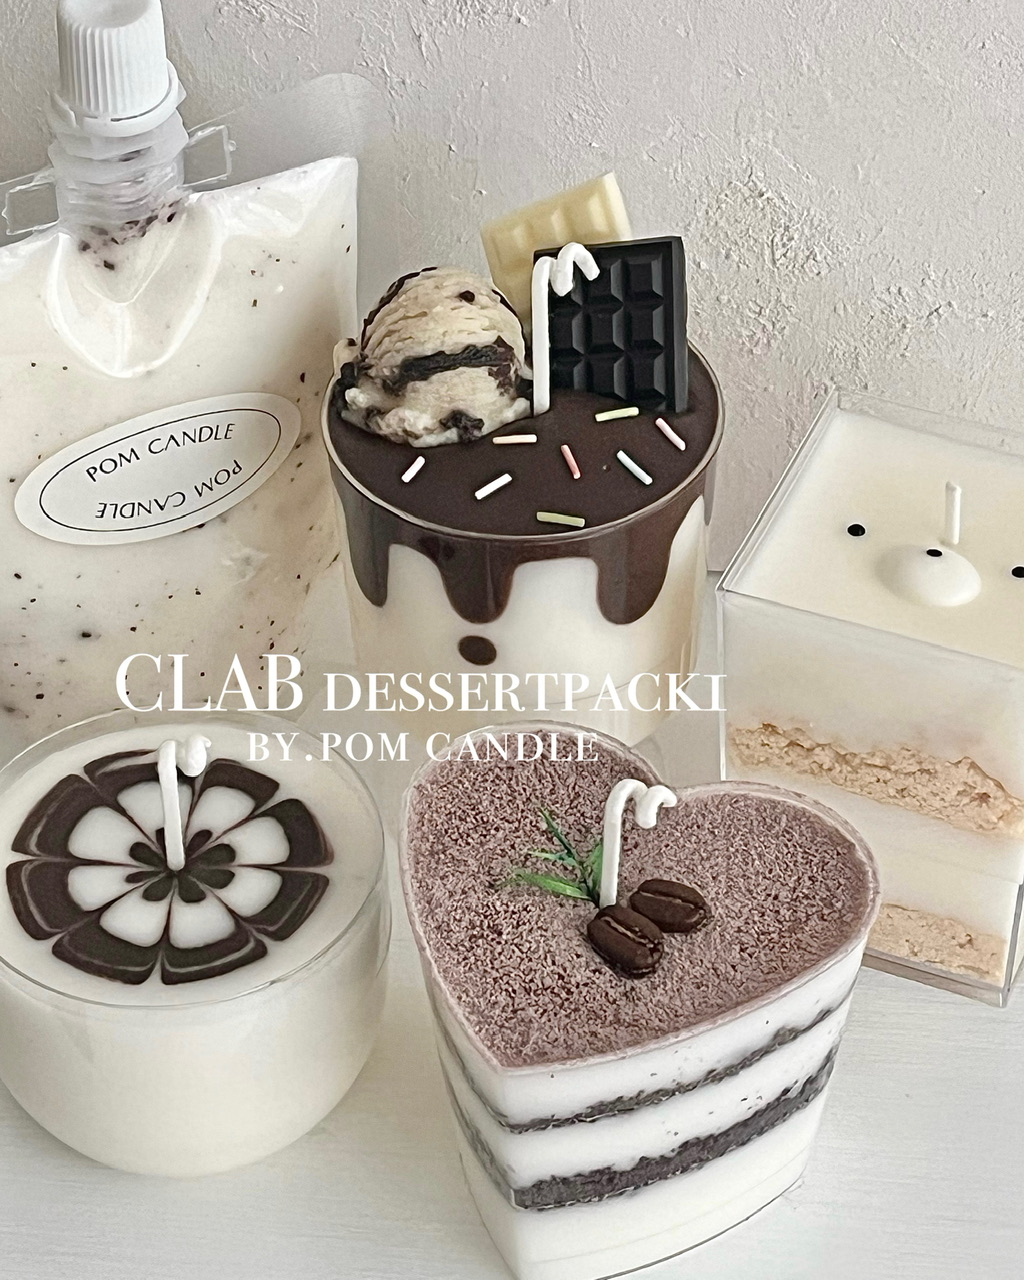 CLAB dessert pack1 class (デザートパック) 紹介🥄